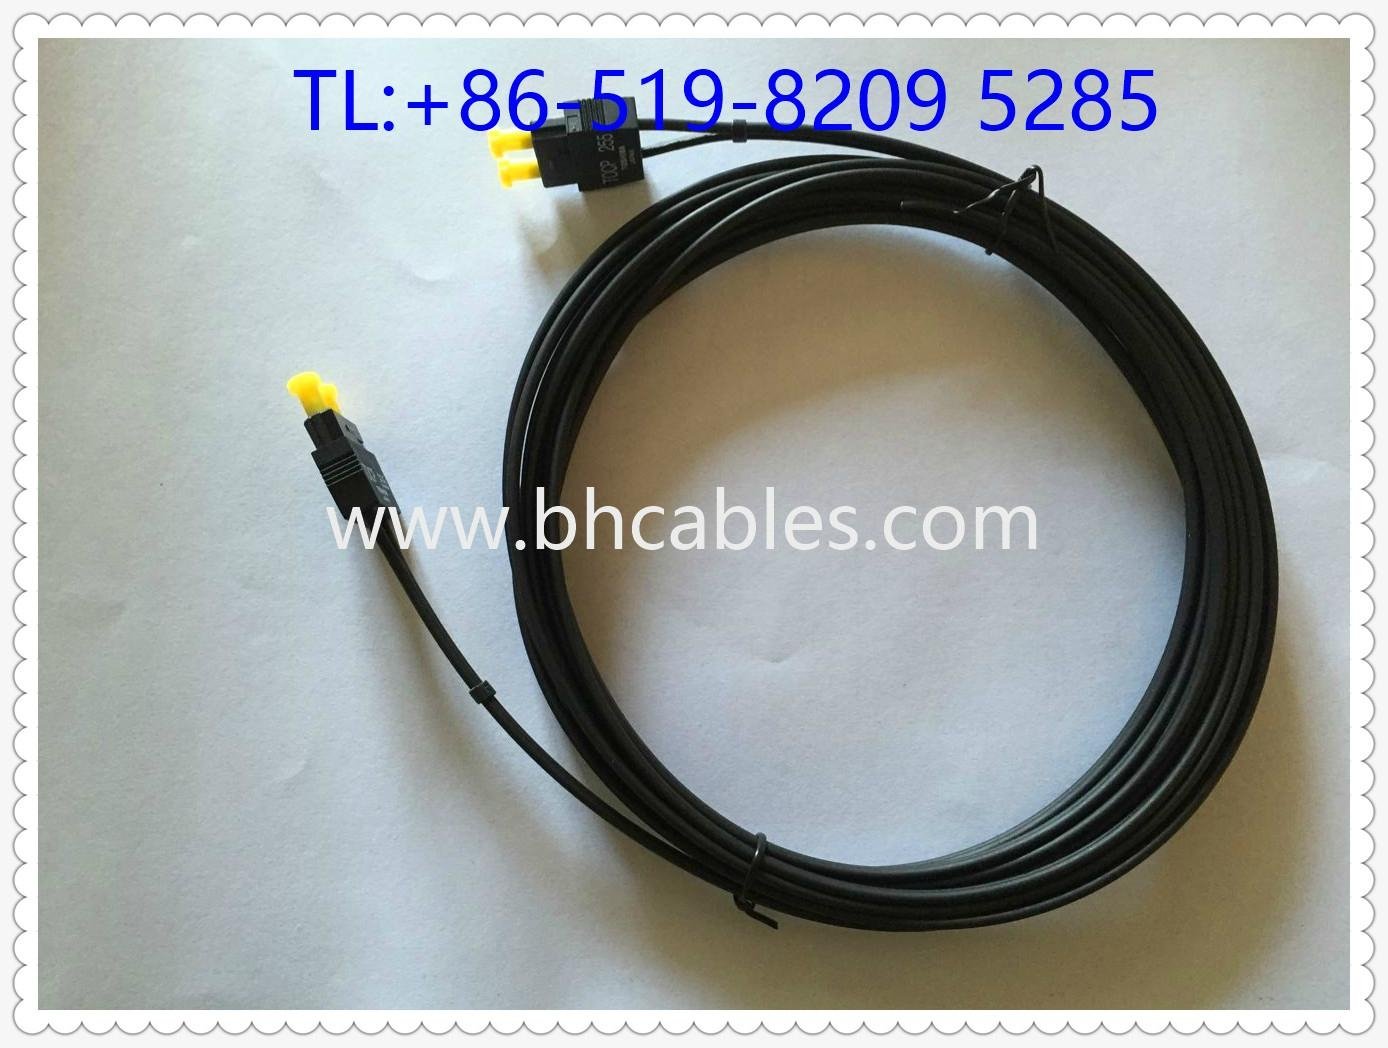 TOCP 255 Toshiba Fiber Optical Cable 2